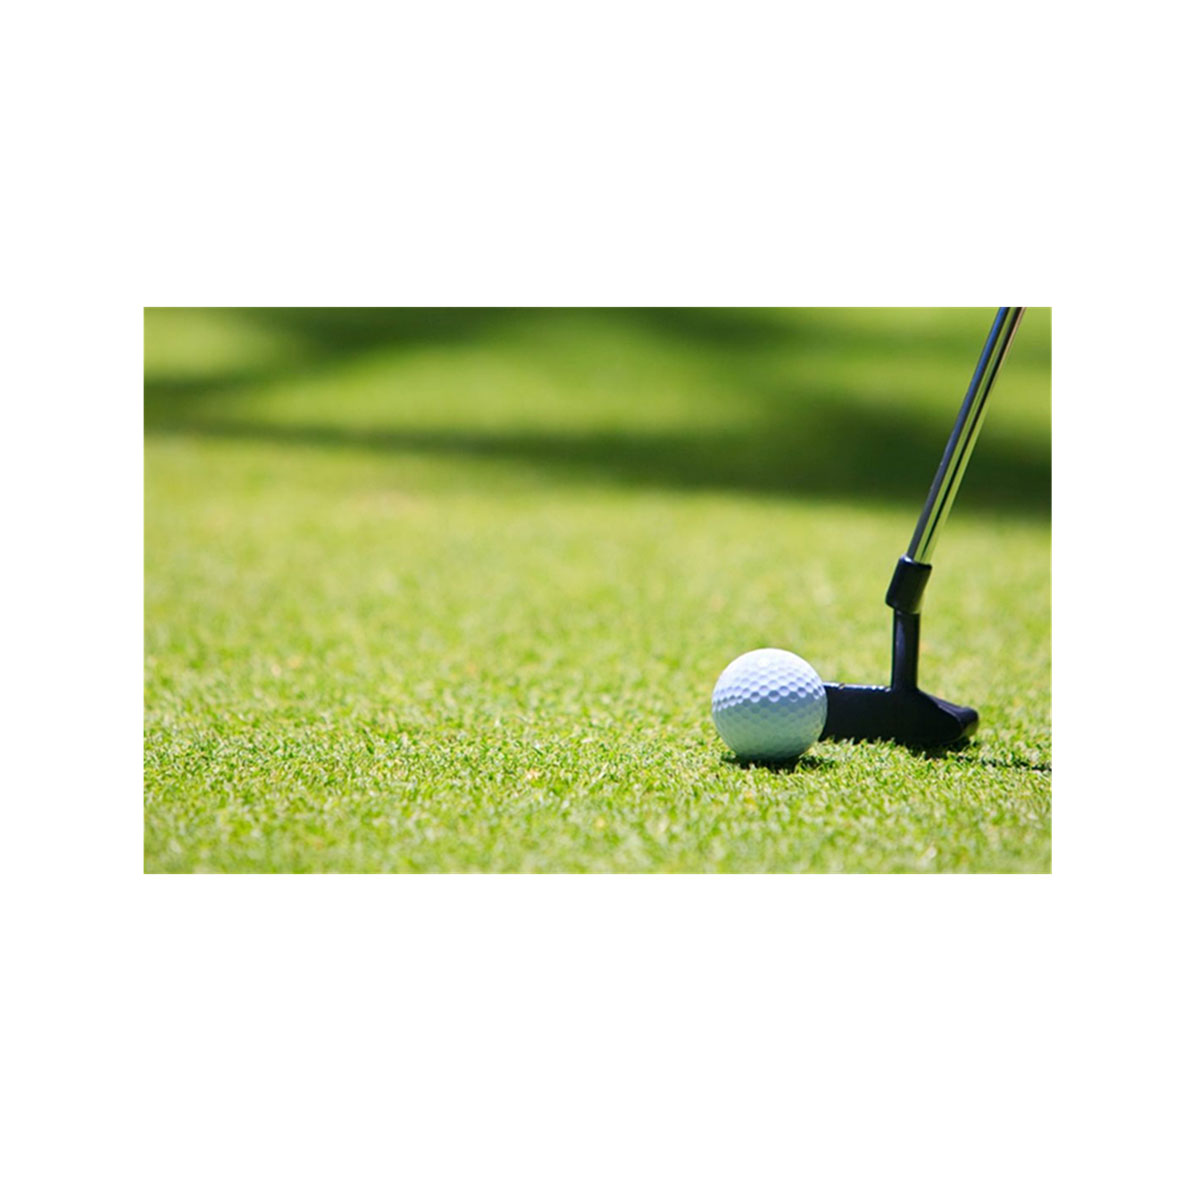 Professional Mini golf turf artificial grass golf putting green outdoor